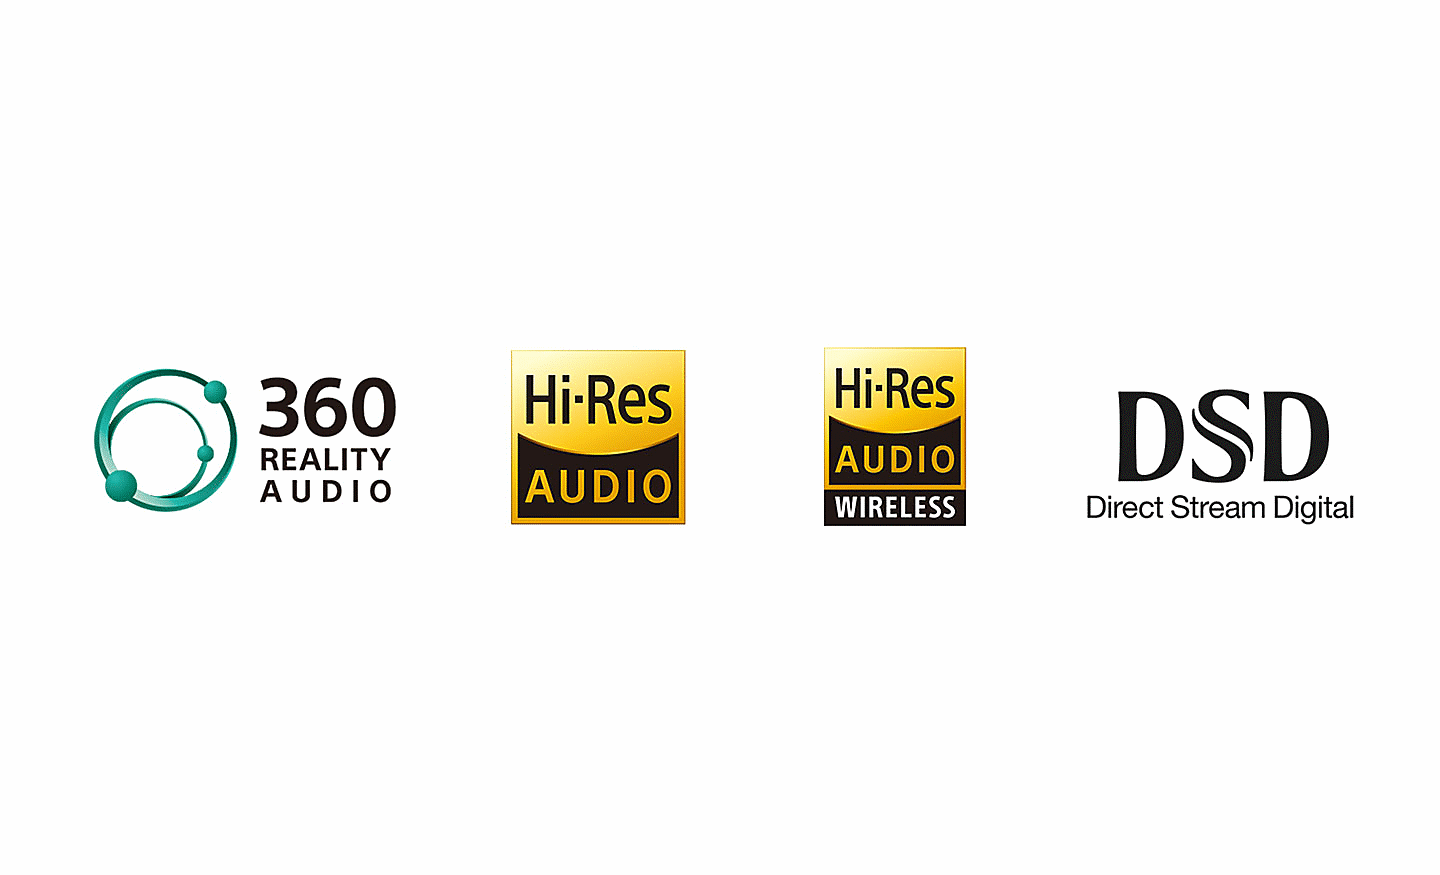 360 Reality Audio 標誌、高解析音質標誌、高解析音質無線標誌、DSD 直接數位流標誌